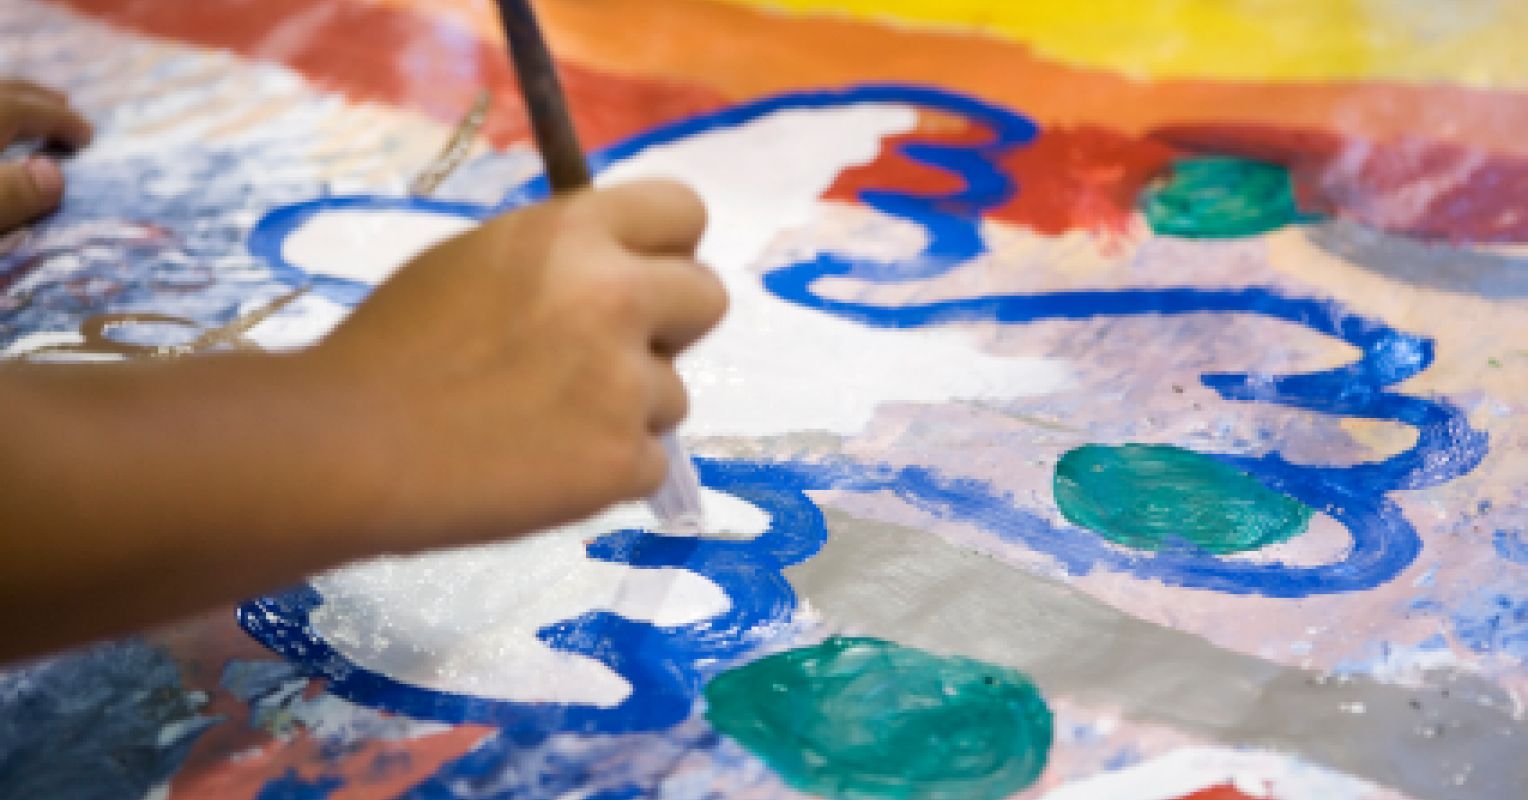 The Psychology Of Children's Artwork